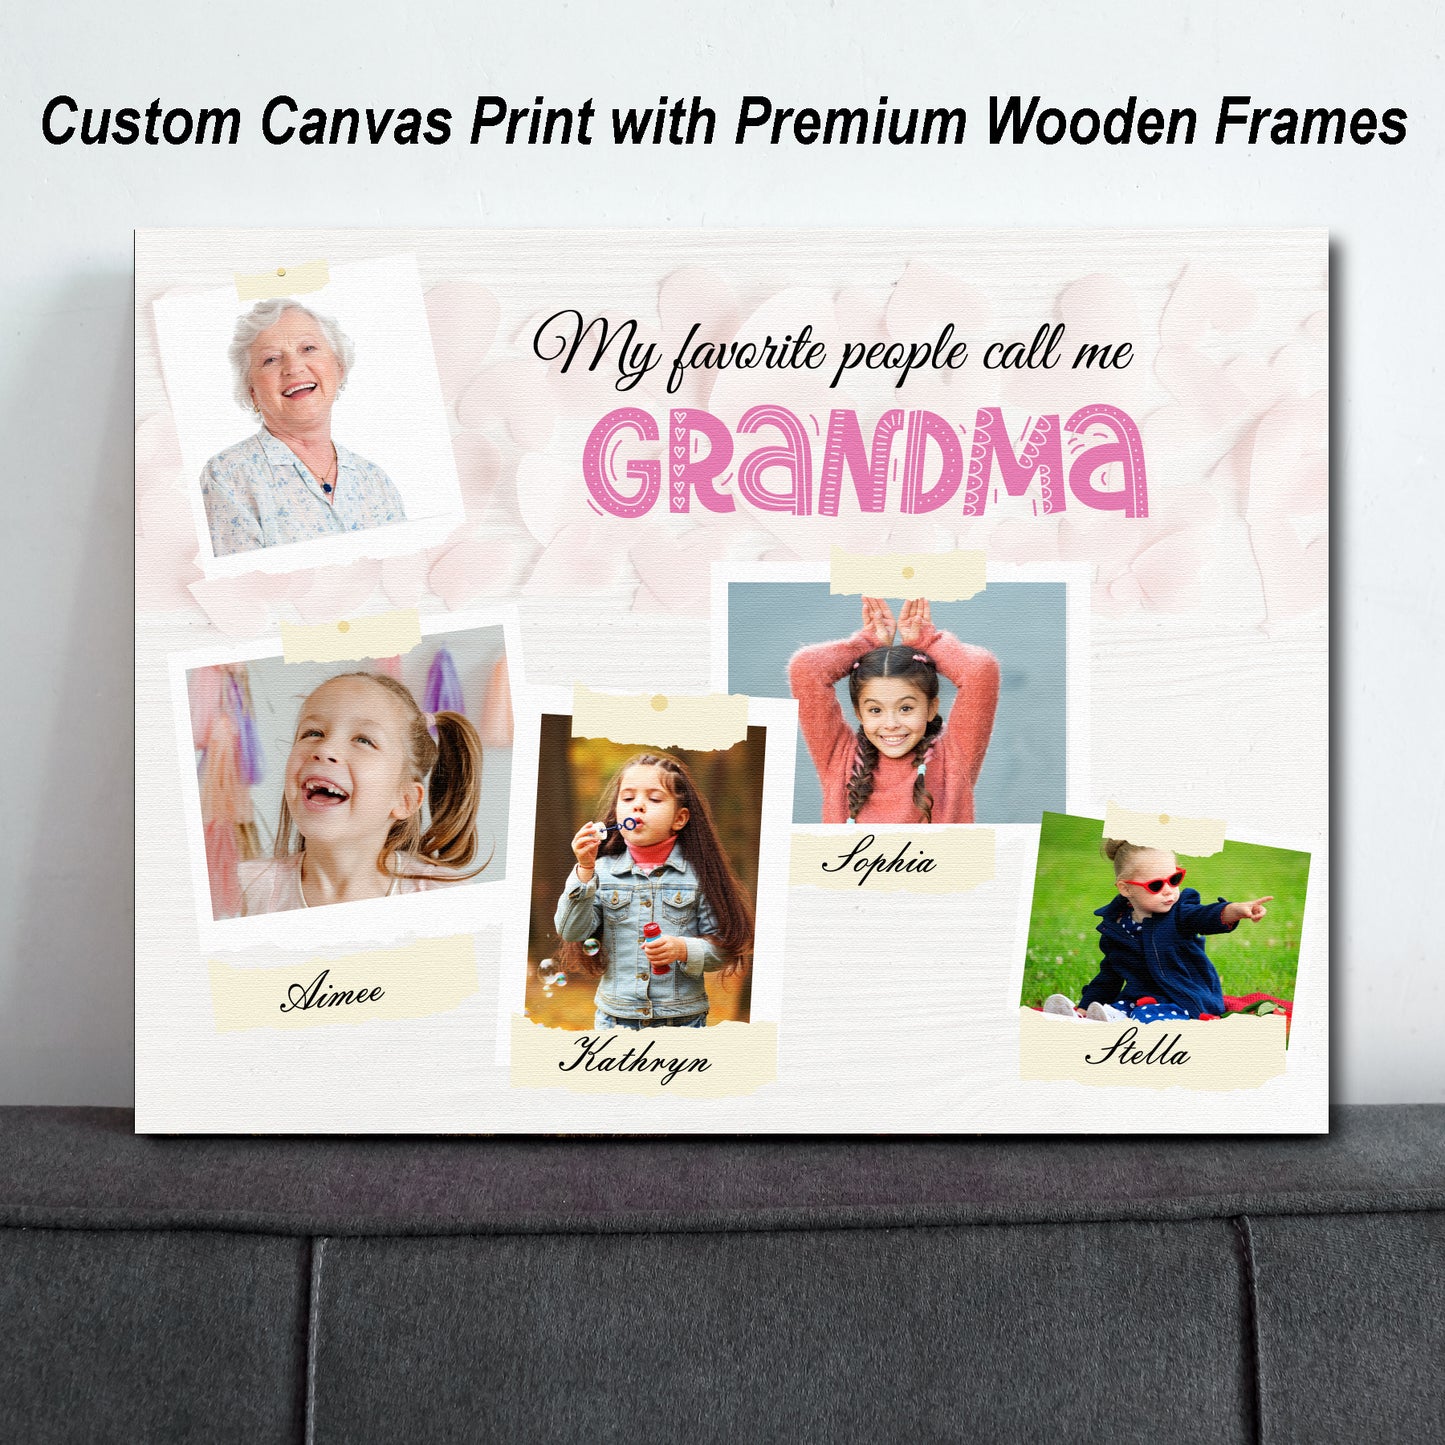 My favorite people call me grandma canvas, custom canvas print, custom gift, 18X24 custom canvas, custom gift, custom canvas prints, custom photo canvas, custom canvas wall art, custom family canvas